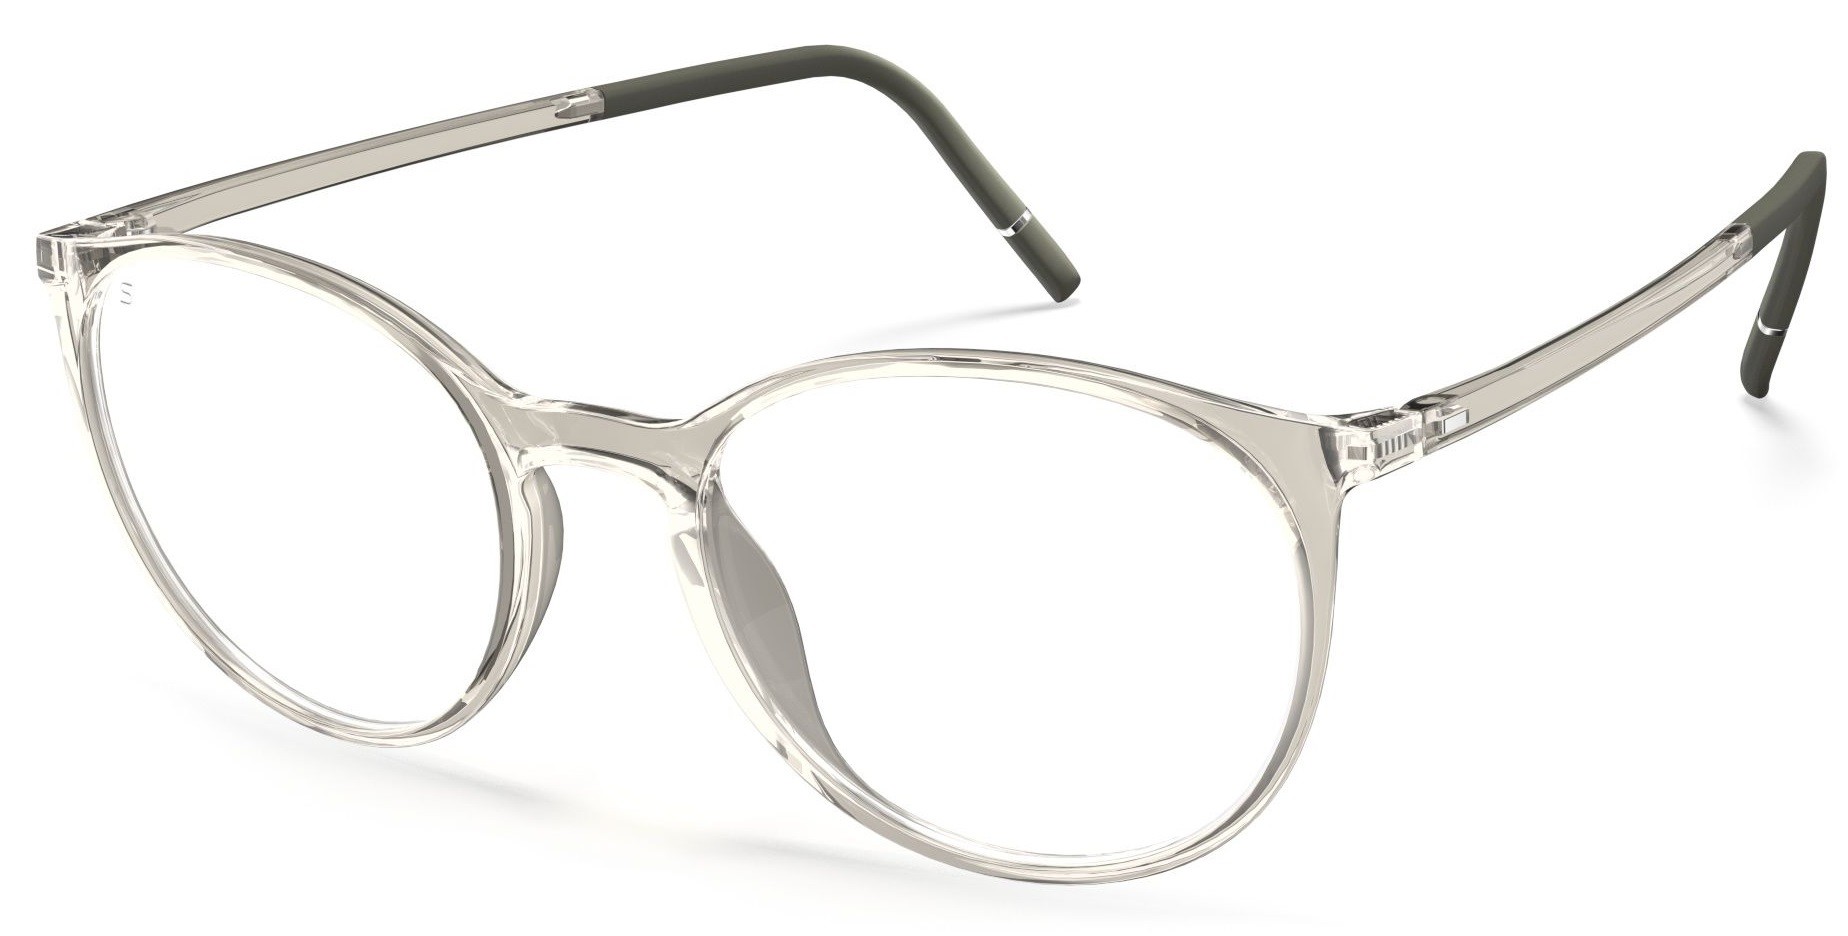 Silhouette 2960 8510 SPX Illusion - Oculos de Grau